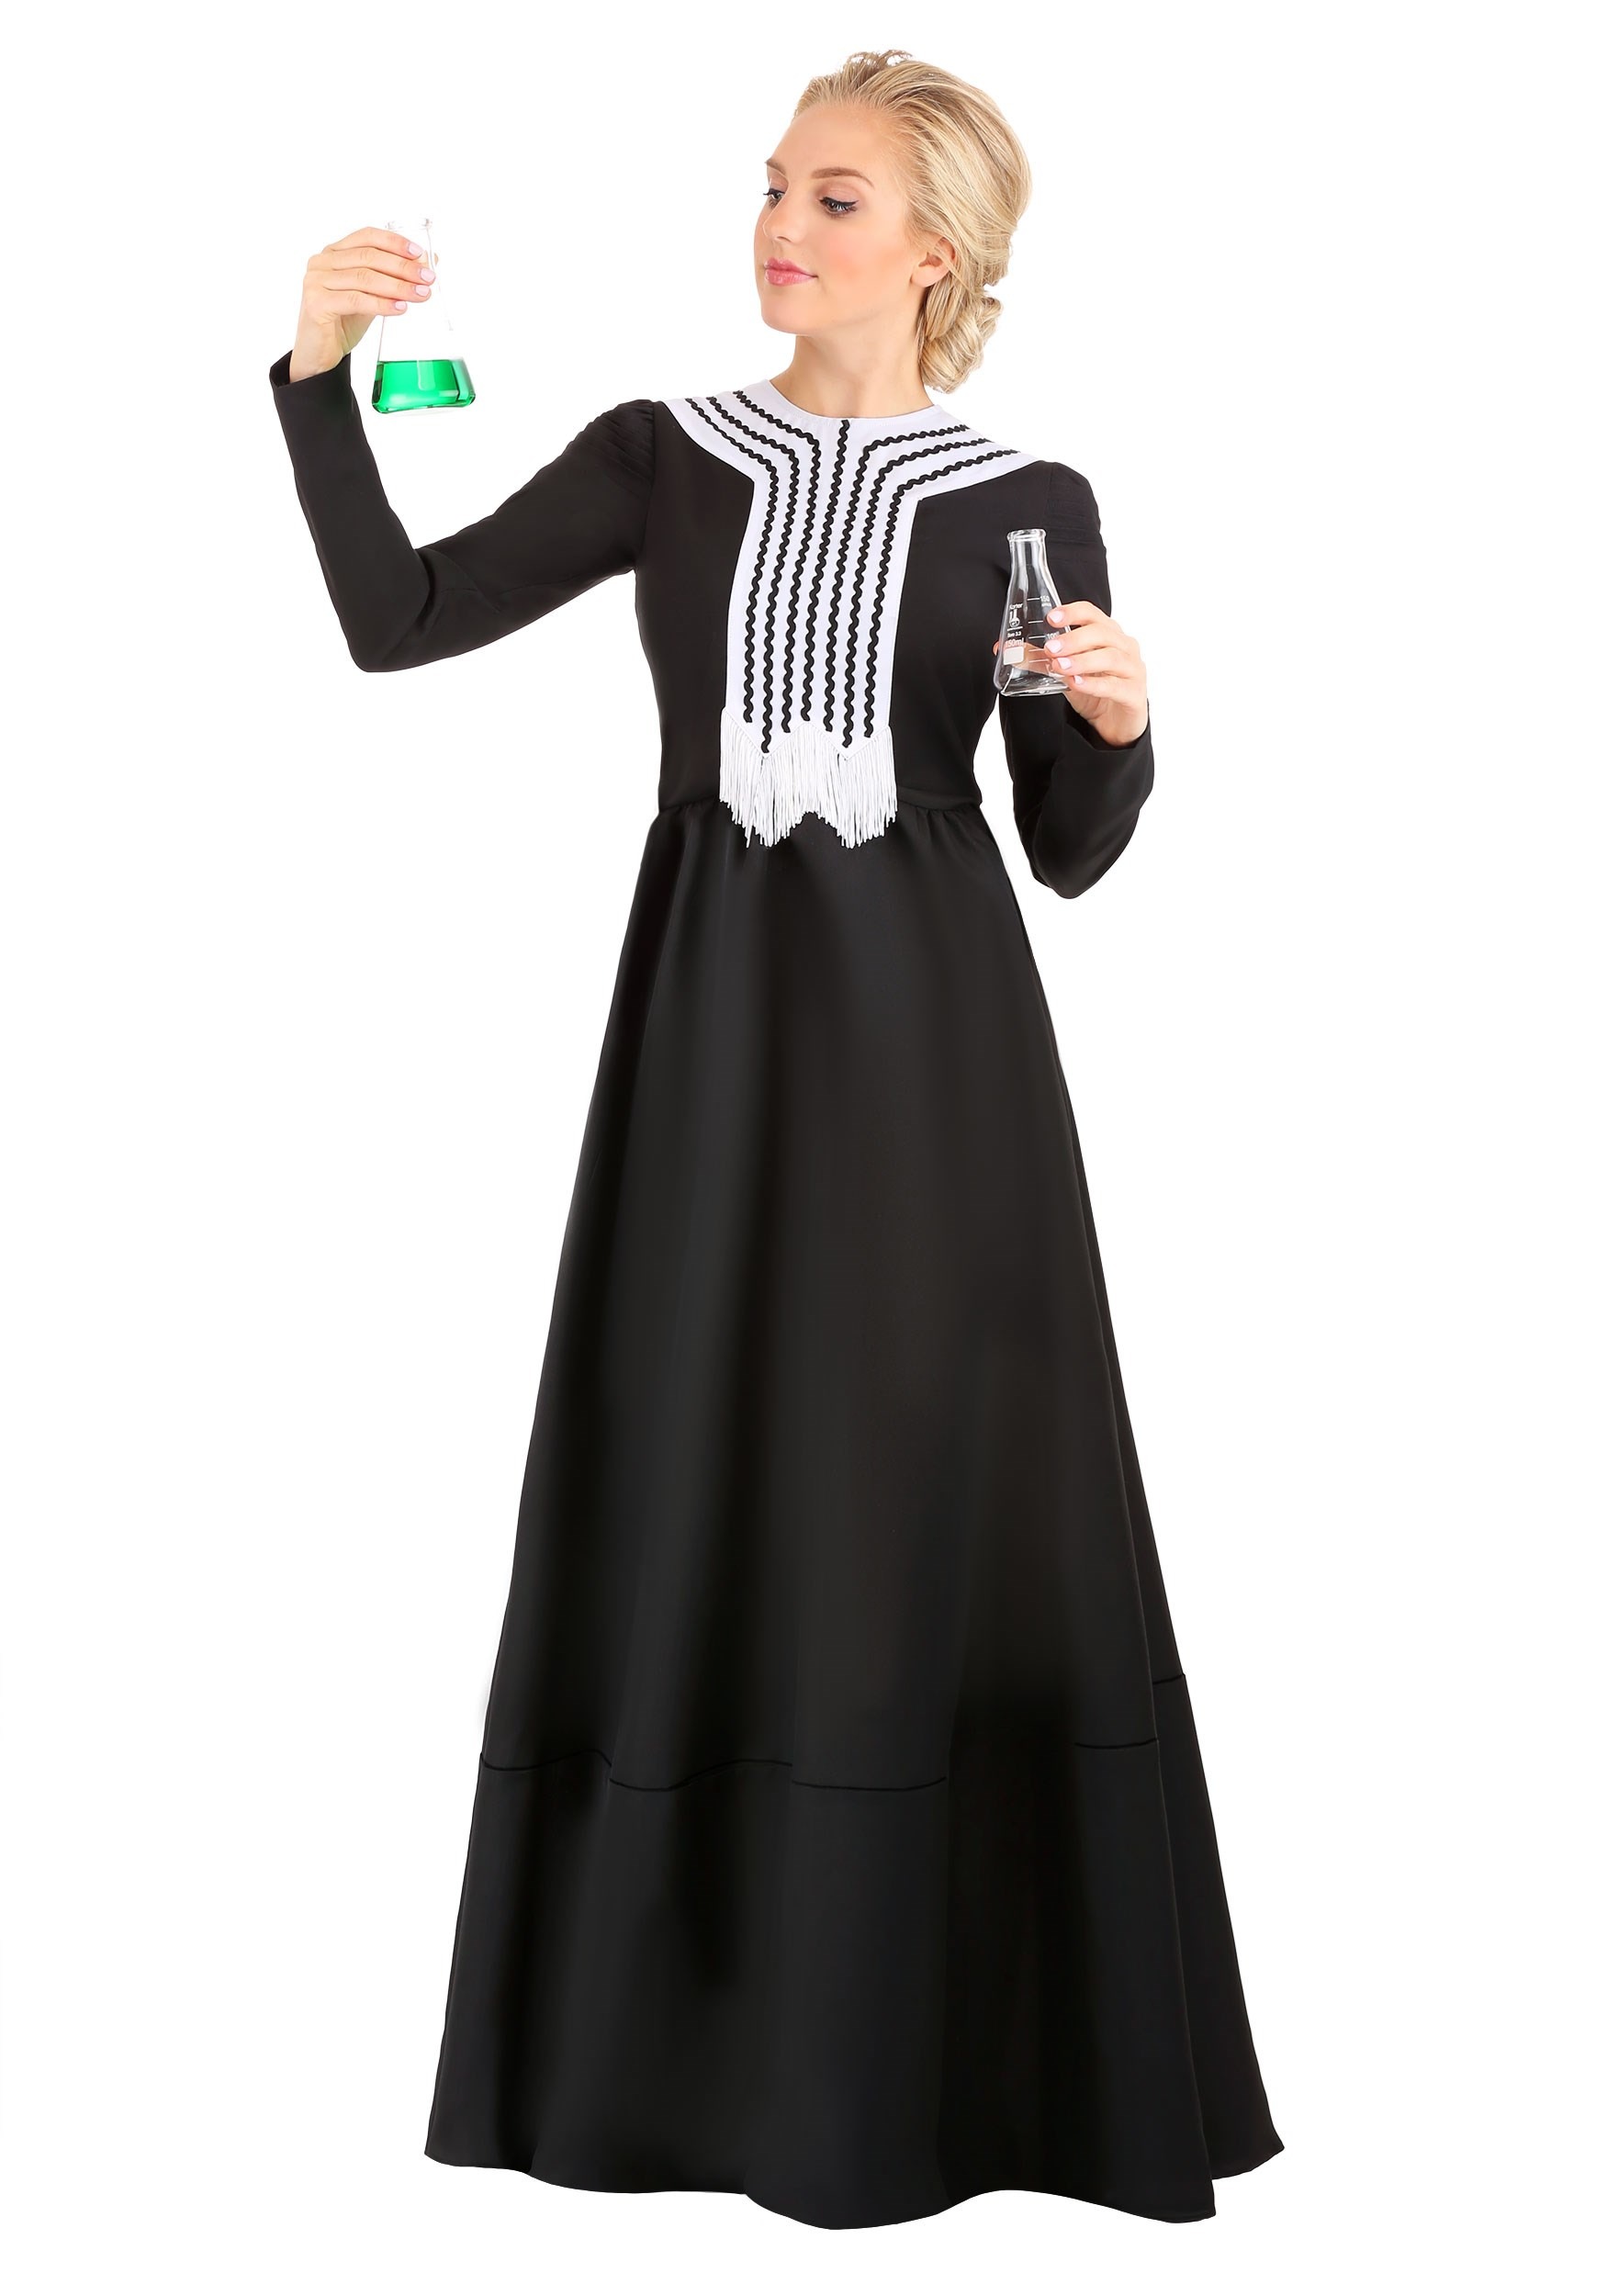 Women’s Marie Curie Costume